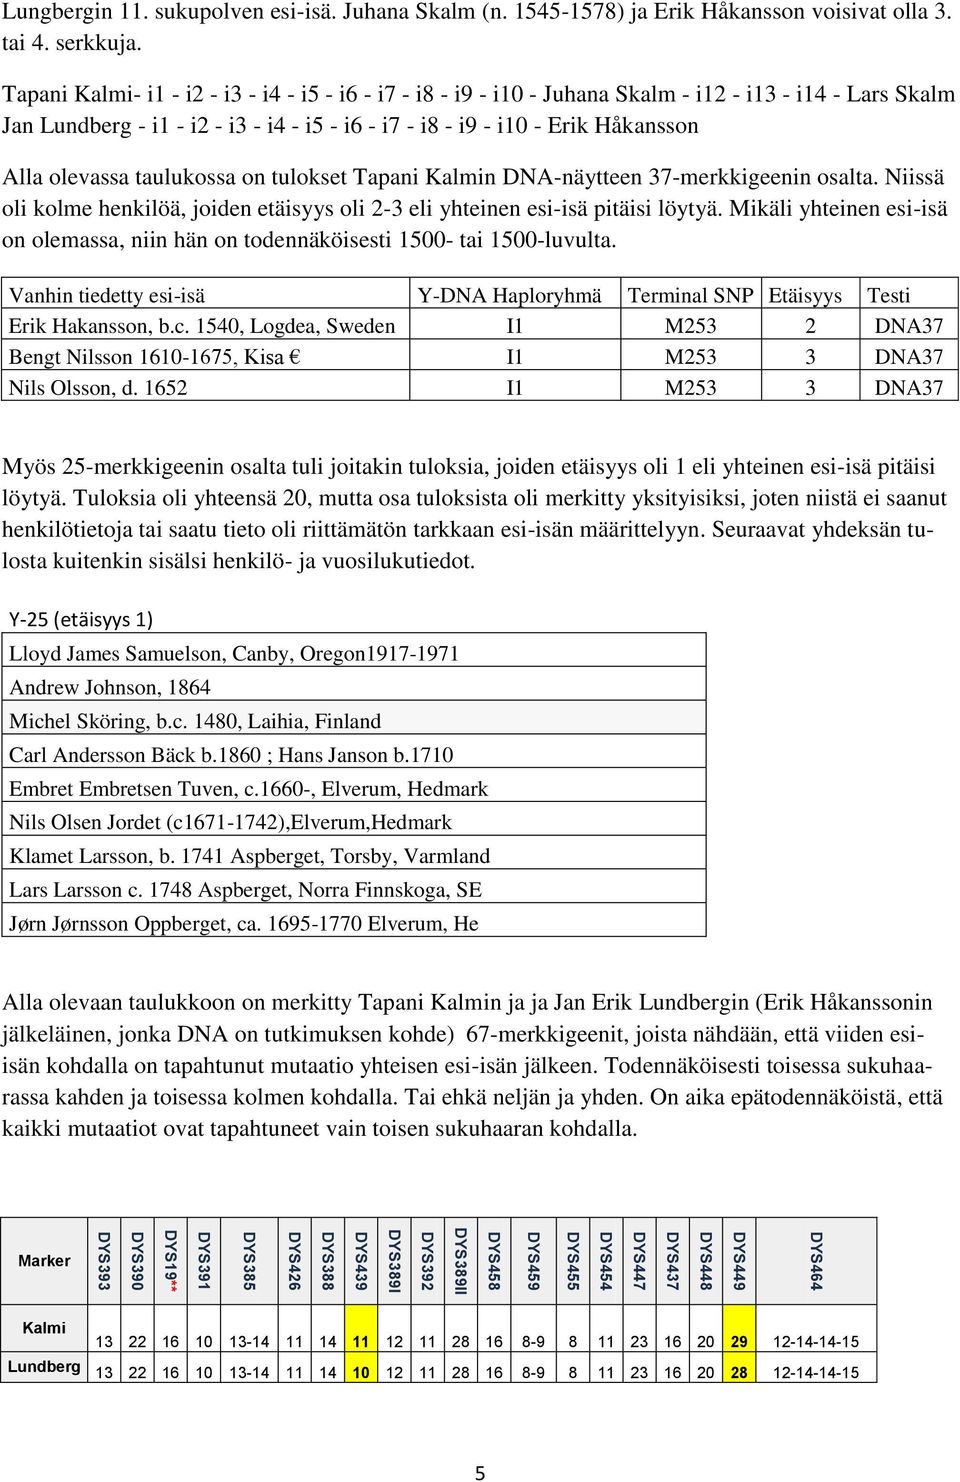 Tapani Kalmi- i1 - i2 - i3 - i4 - i5 - i6 - i7 - i8 - i9 - i10 - Juhana Skalm - i12 - i13 - i14 - Lars Skalm Jan Lundberg - i1 - i2 - i3 - i4 - i5 - i6 - i7 - i8 - i9 - i10 - Erik Håkansson Alla